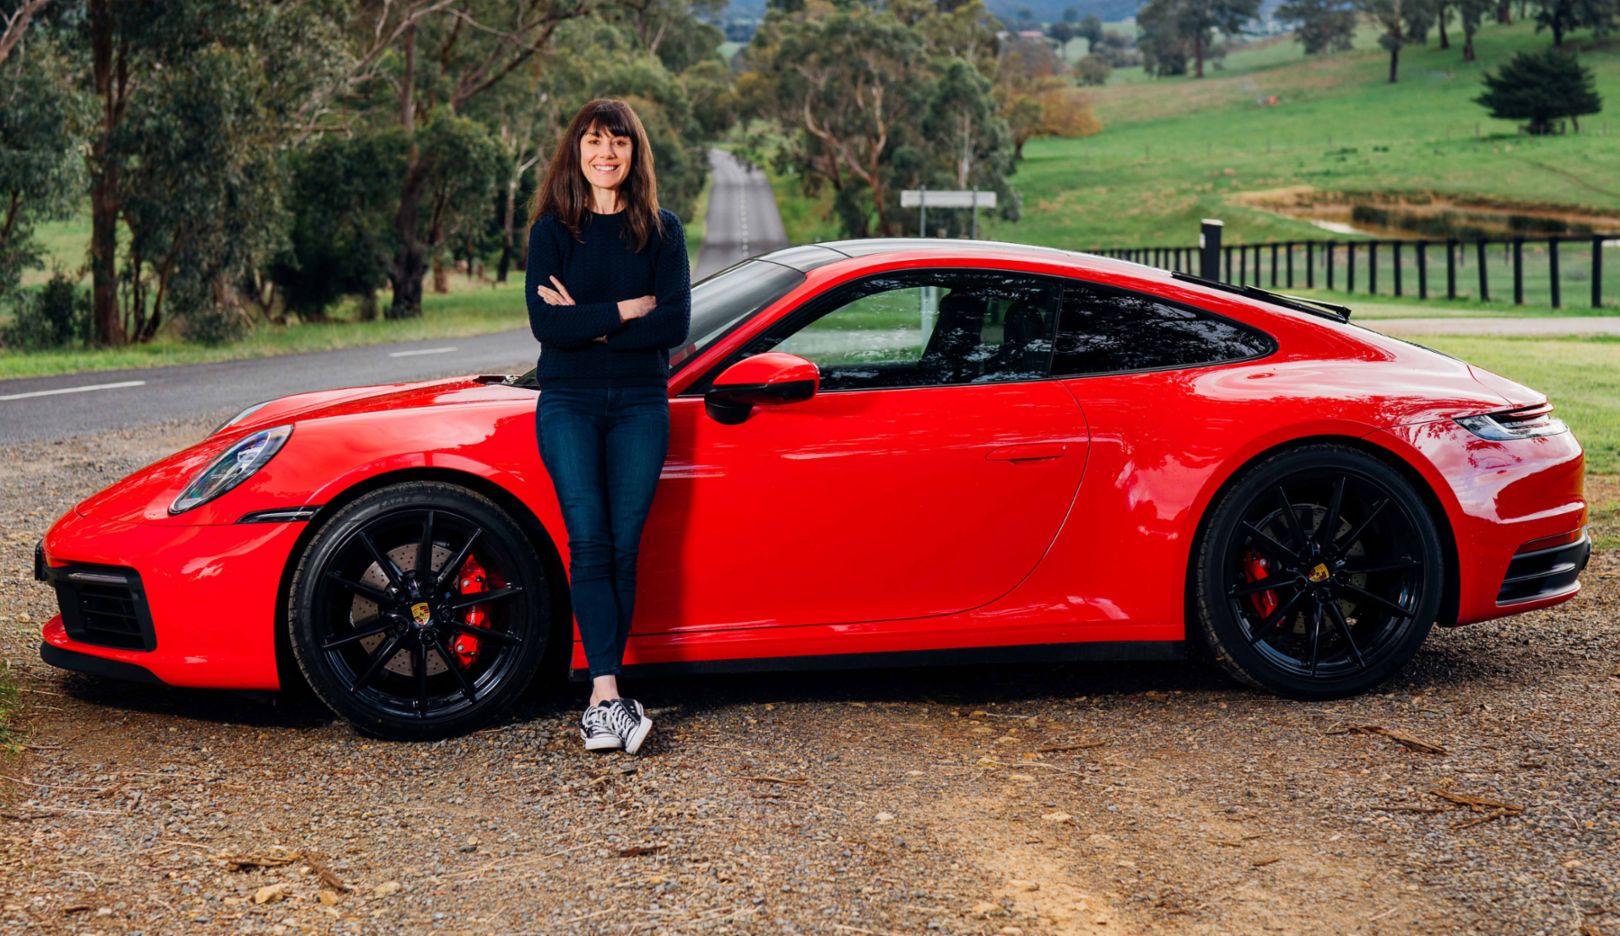 Kate Reid, 911 Carrera S, Melbourne, 2019, Porsche AG